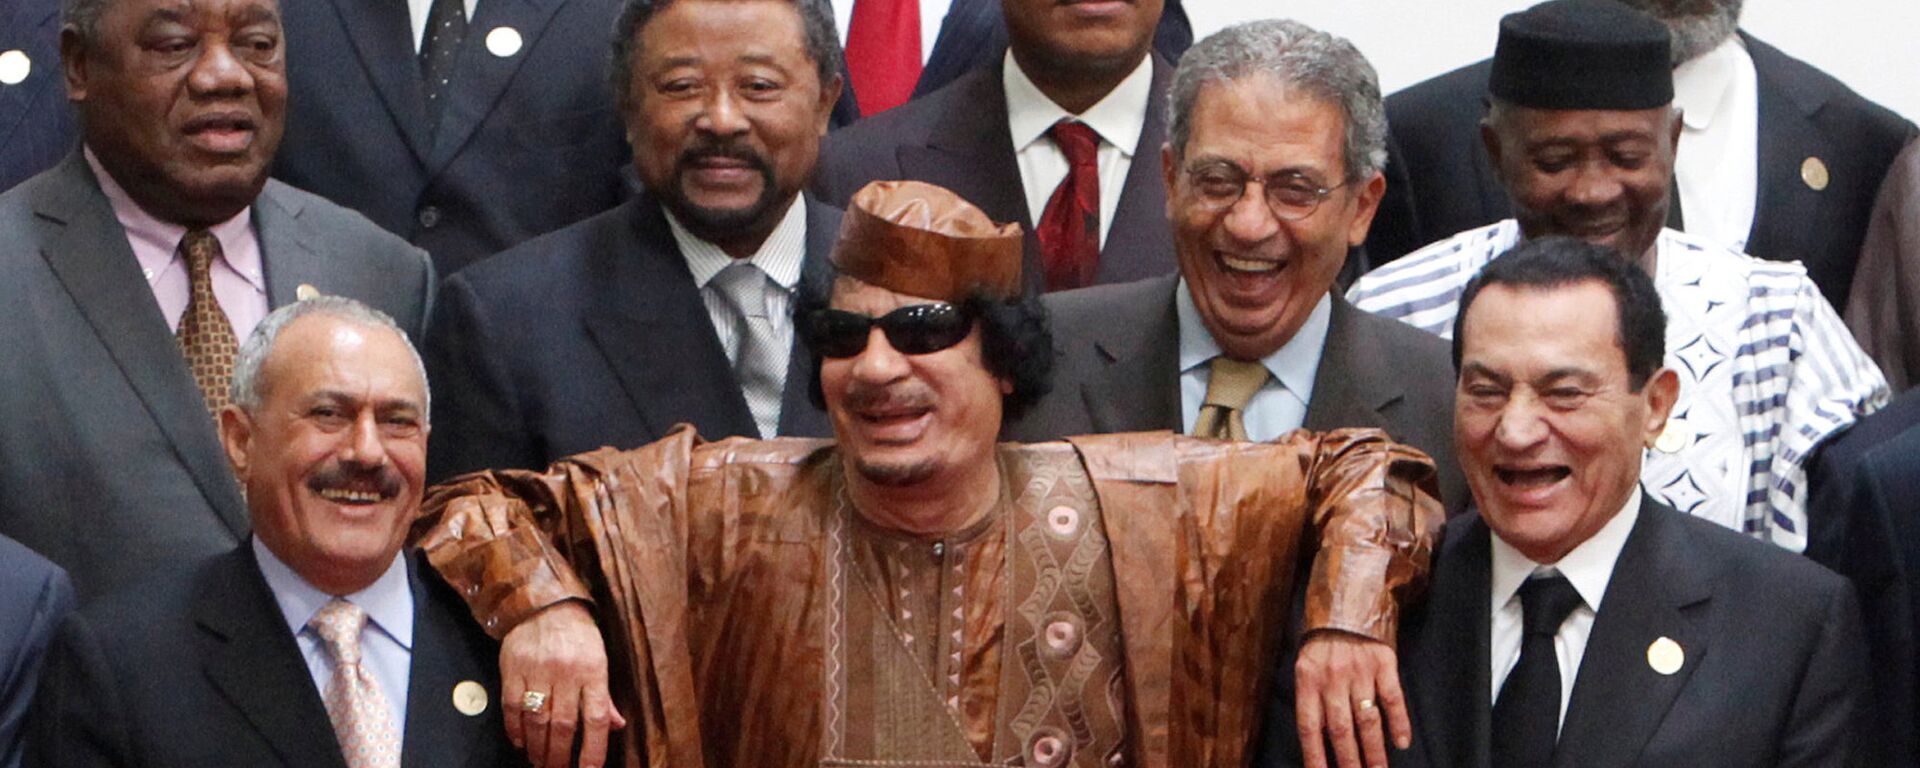 Хосни Мубарак, Муаммар аль Каддафи и Али Абдалла Салех во время Второго Афро-Арабского Саммита (10 октября 2010). Сурт, Ливия - Sputnik Արմենիա, 1920, 10.08.2019